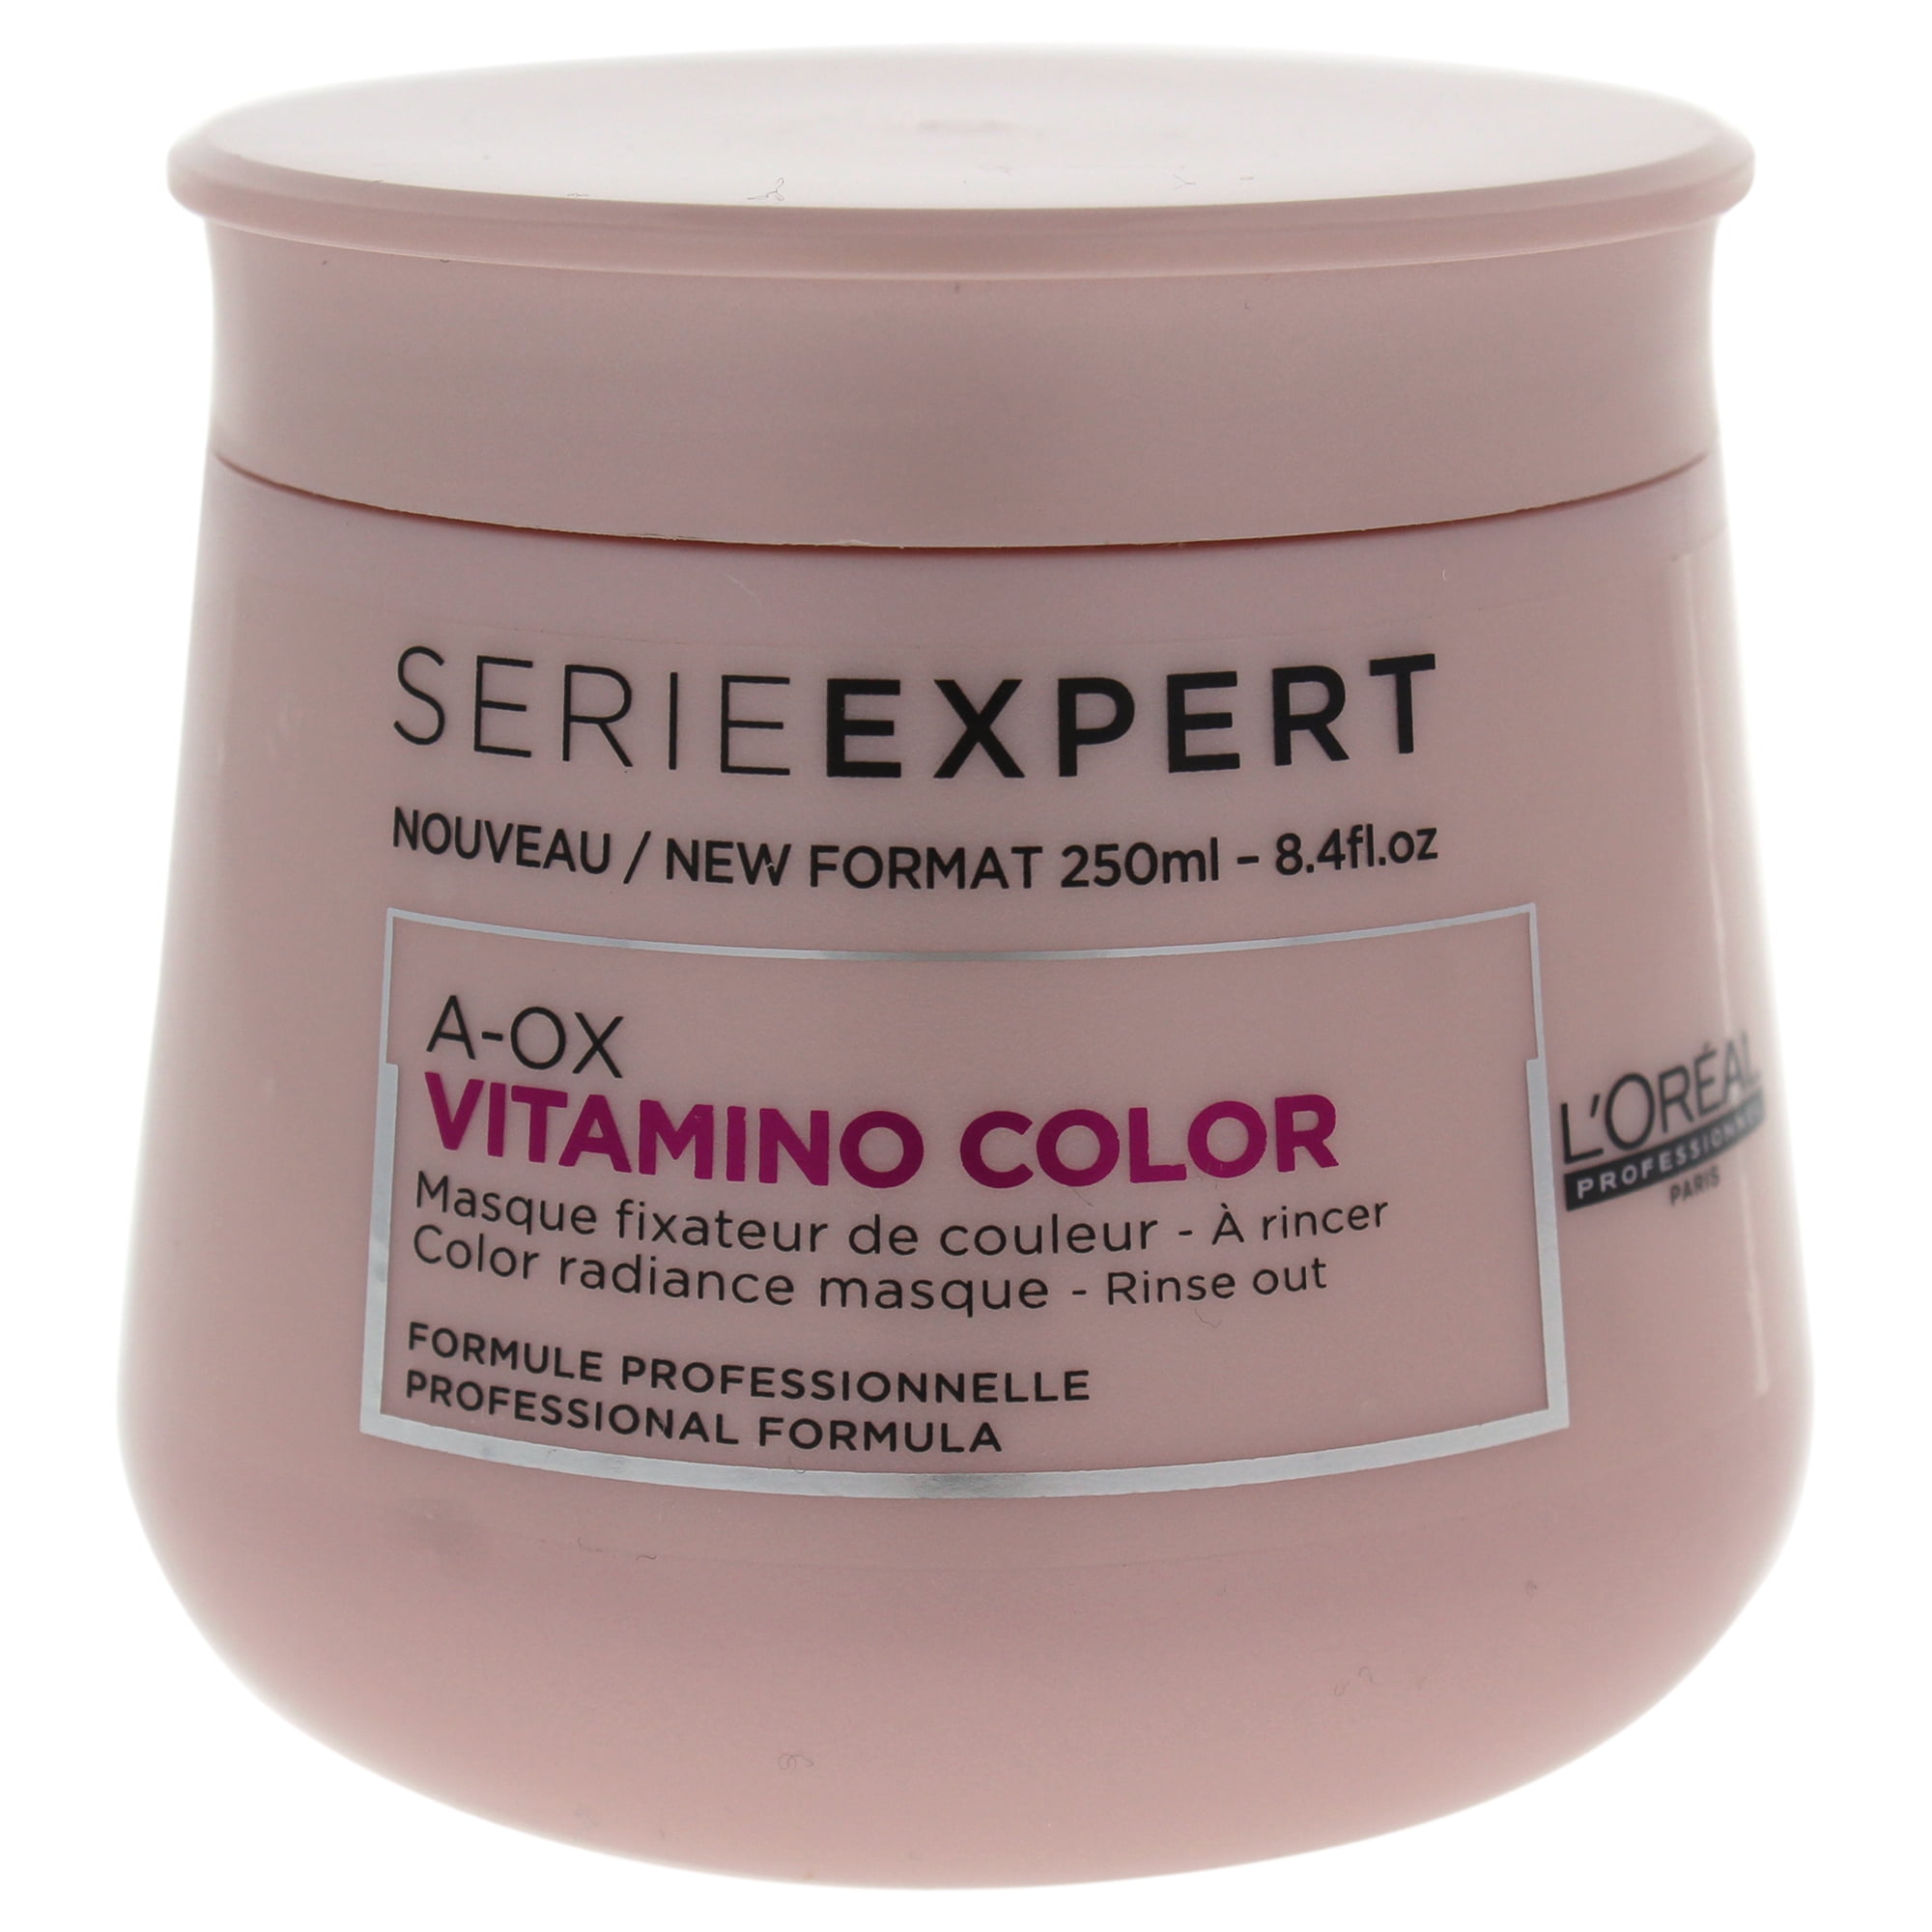 Serie Expert Vitamino Color A-Ox Hair Masque - Walmart.com